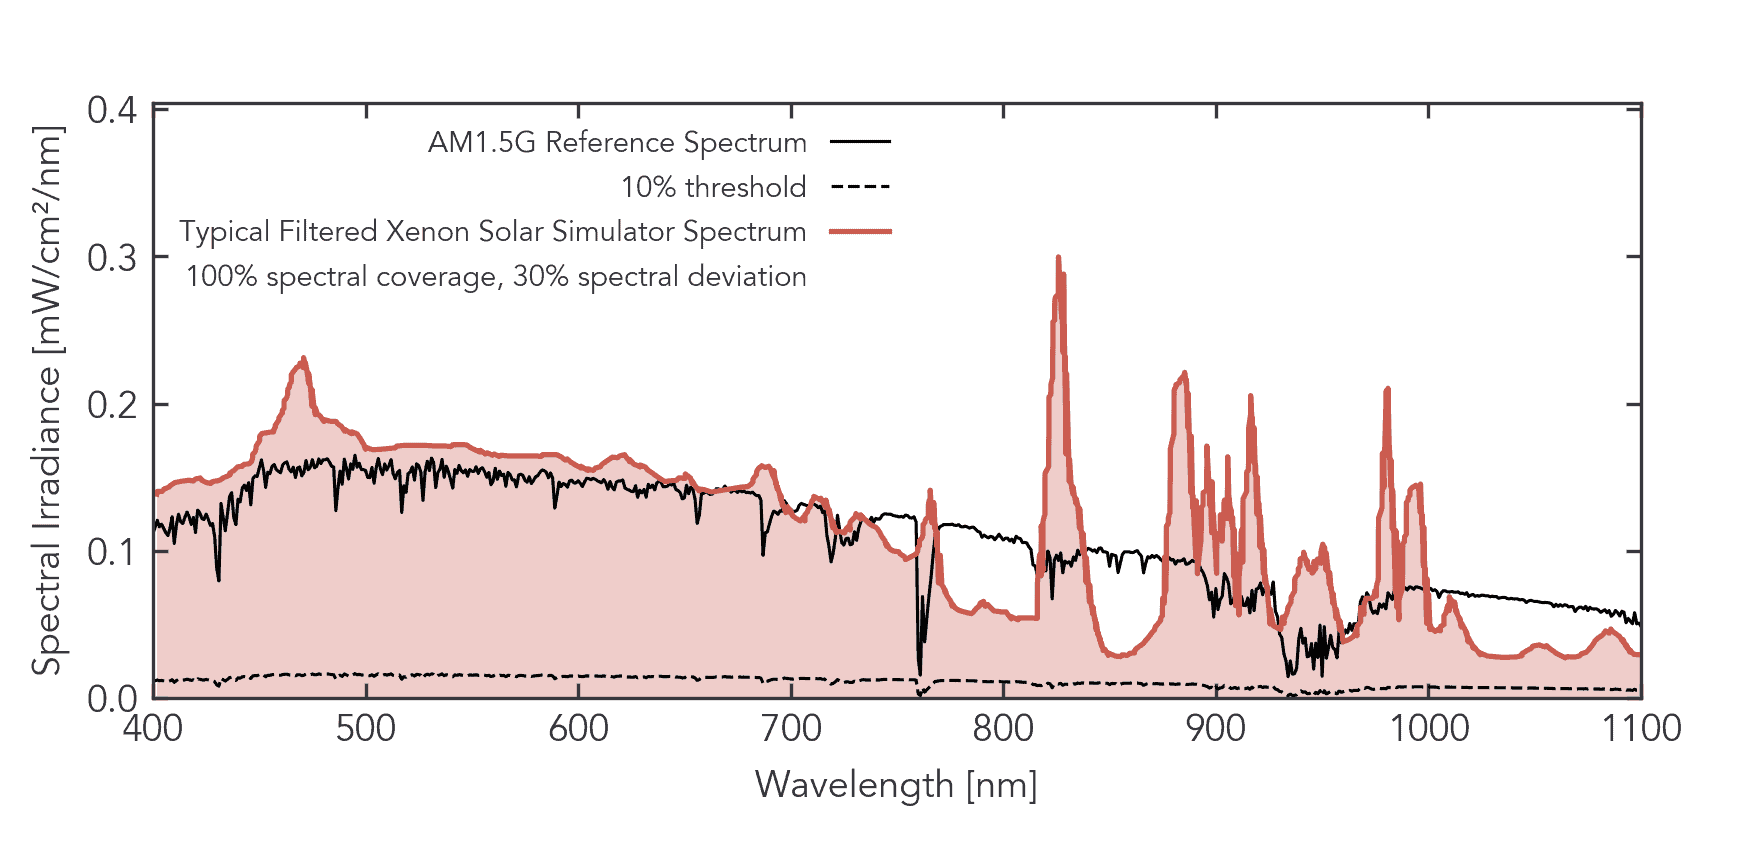 Typical Filtered Xenon Solar Simulator Spectrum